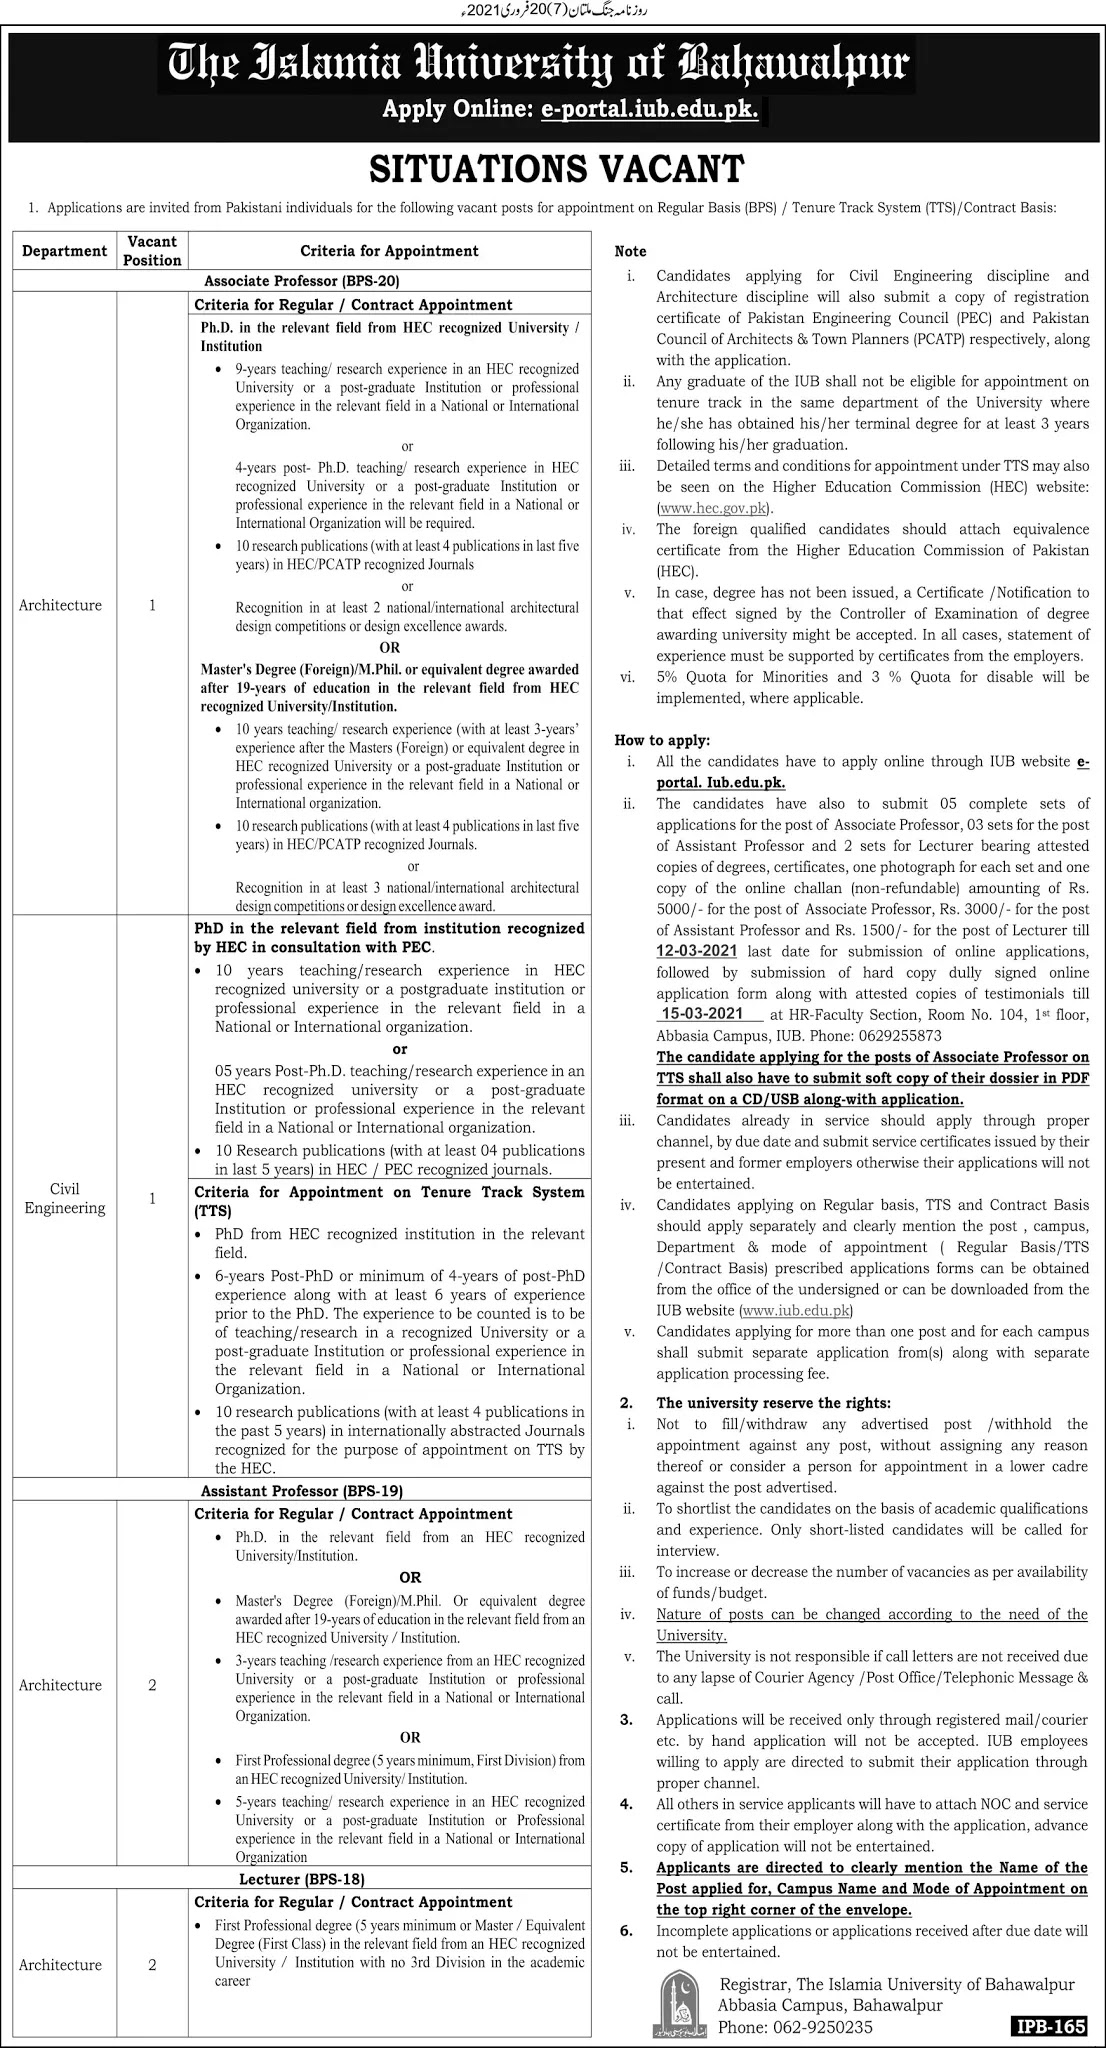 Islamia-University-of-Bahawalpur-Jobs-2021-Apply-Online-IUB-Jobs-Advertisement-2021